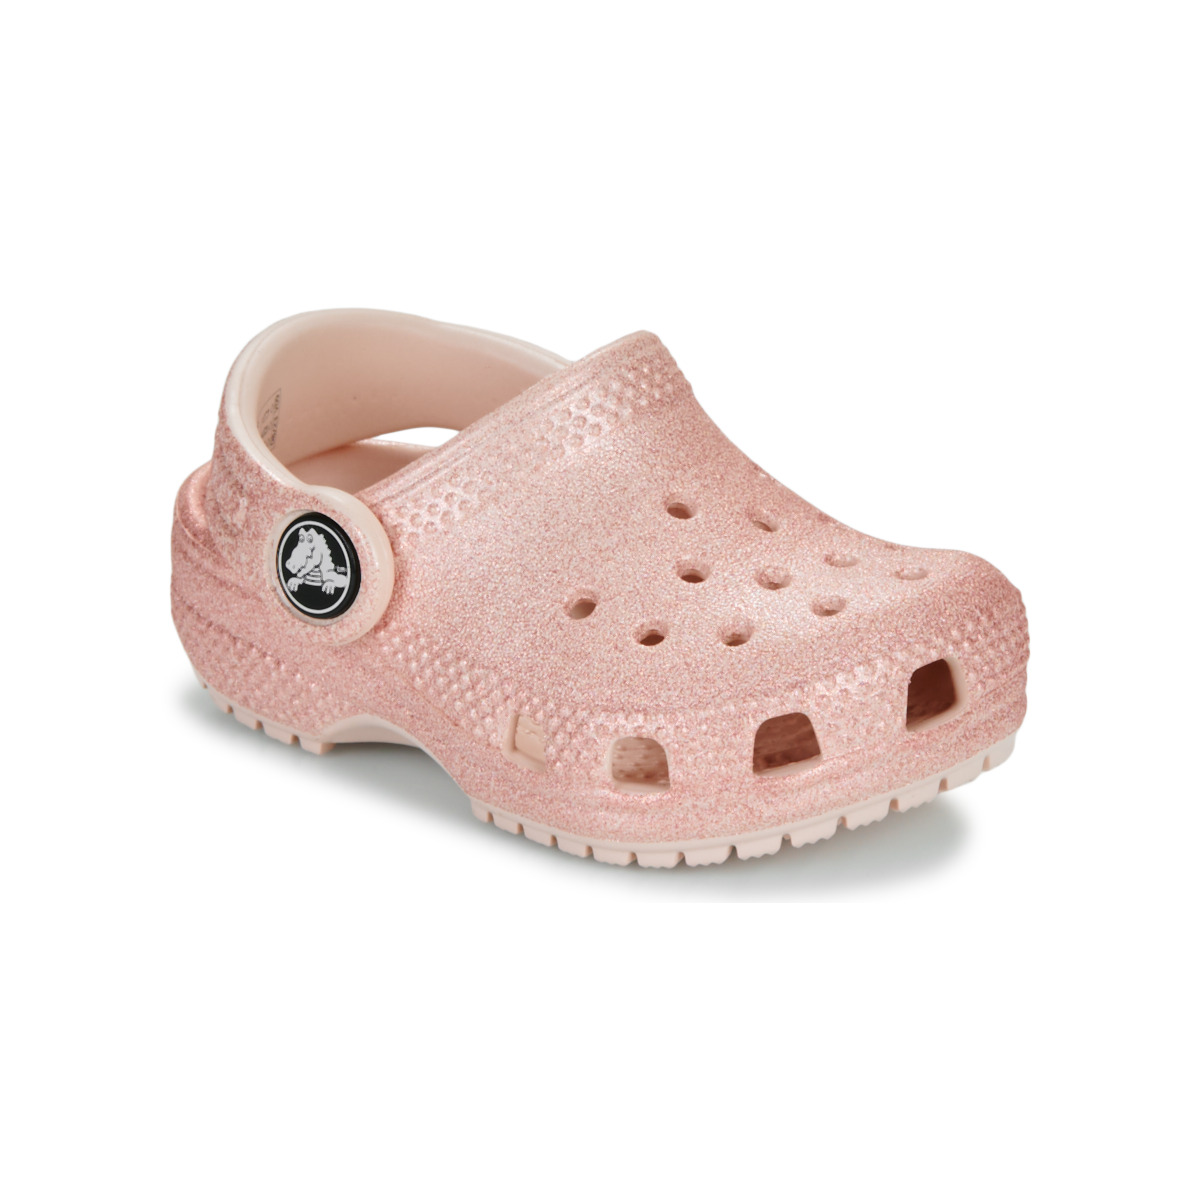 Buty Dziewczynka Chodaki Crocs Classic Glitter Clog T Różowy / Glitter